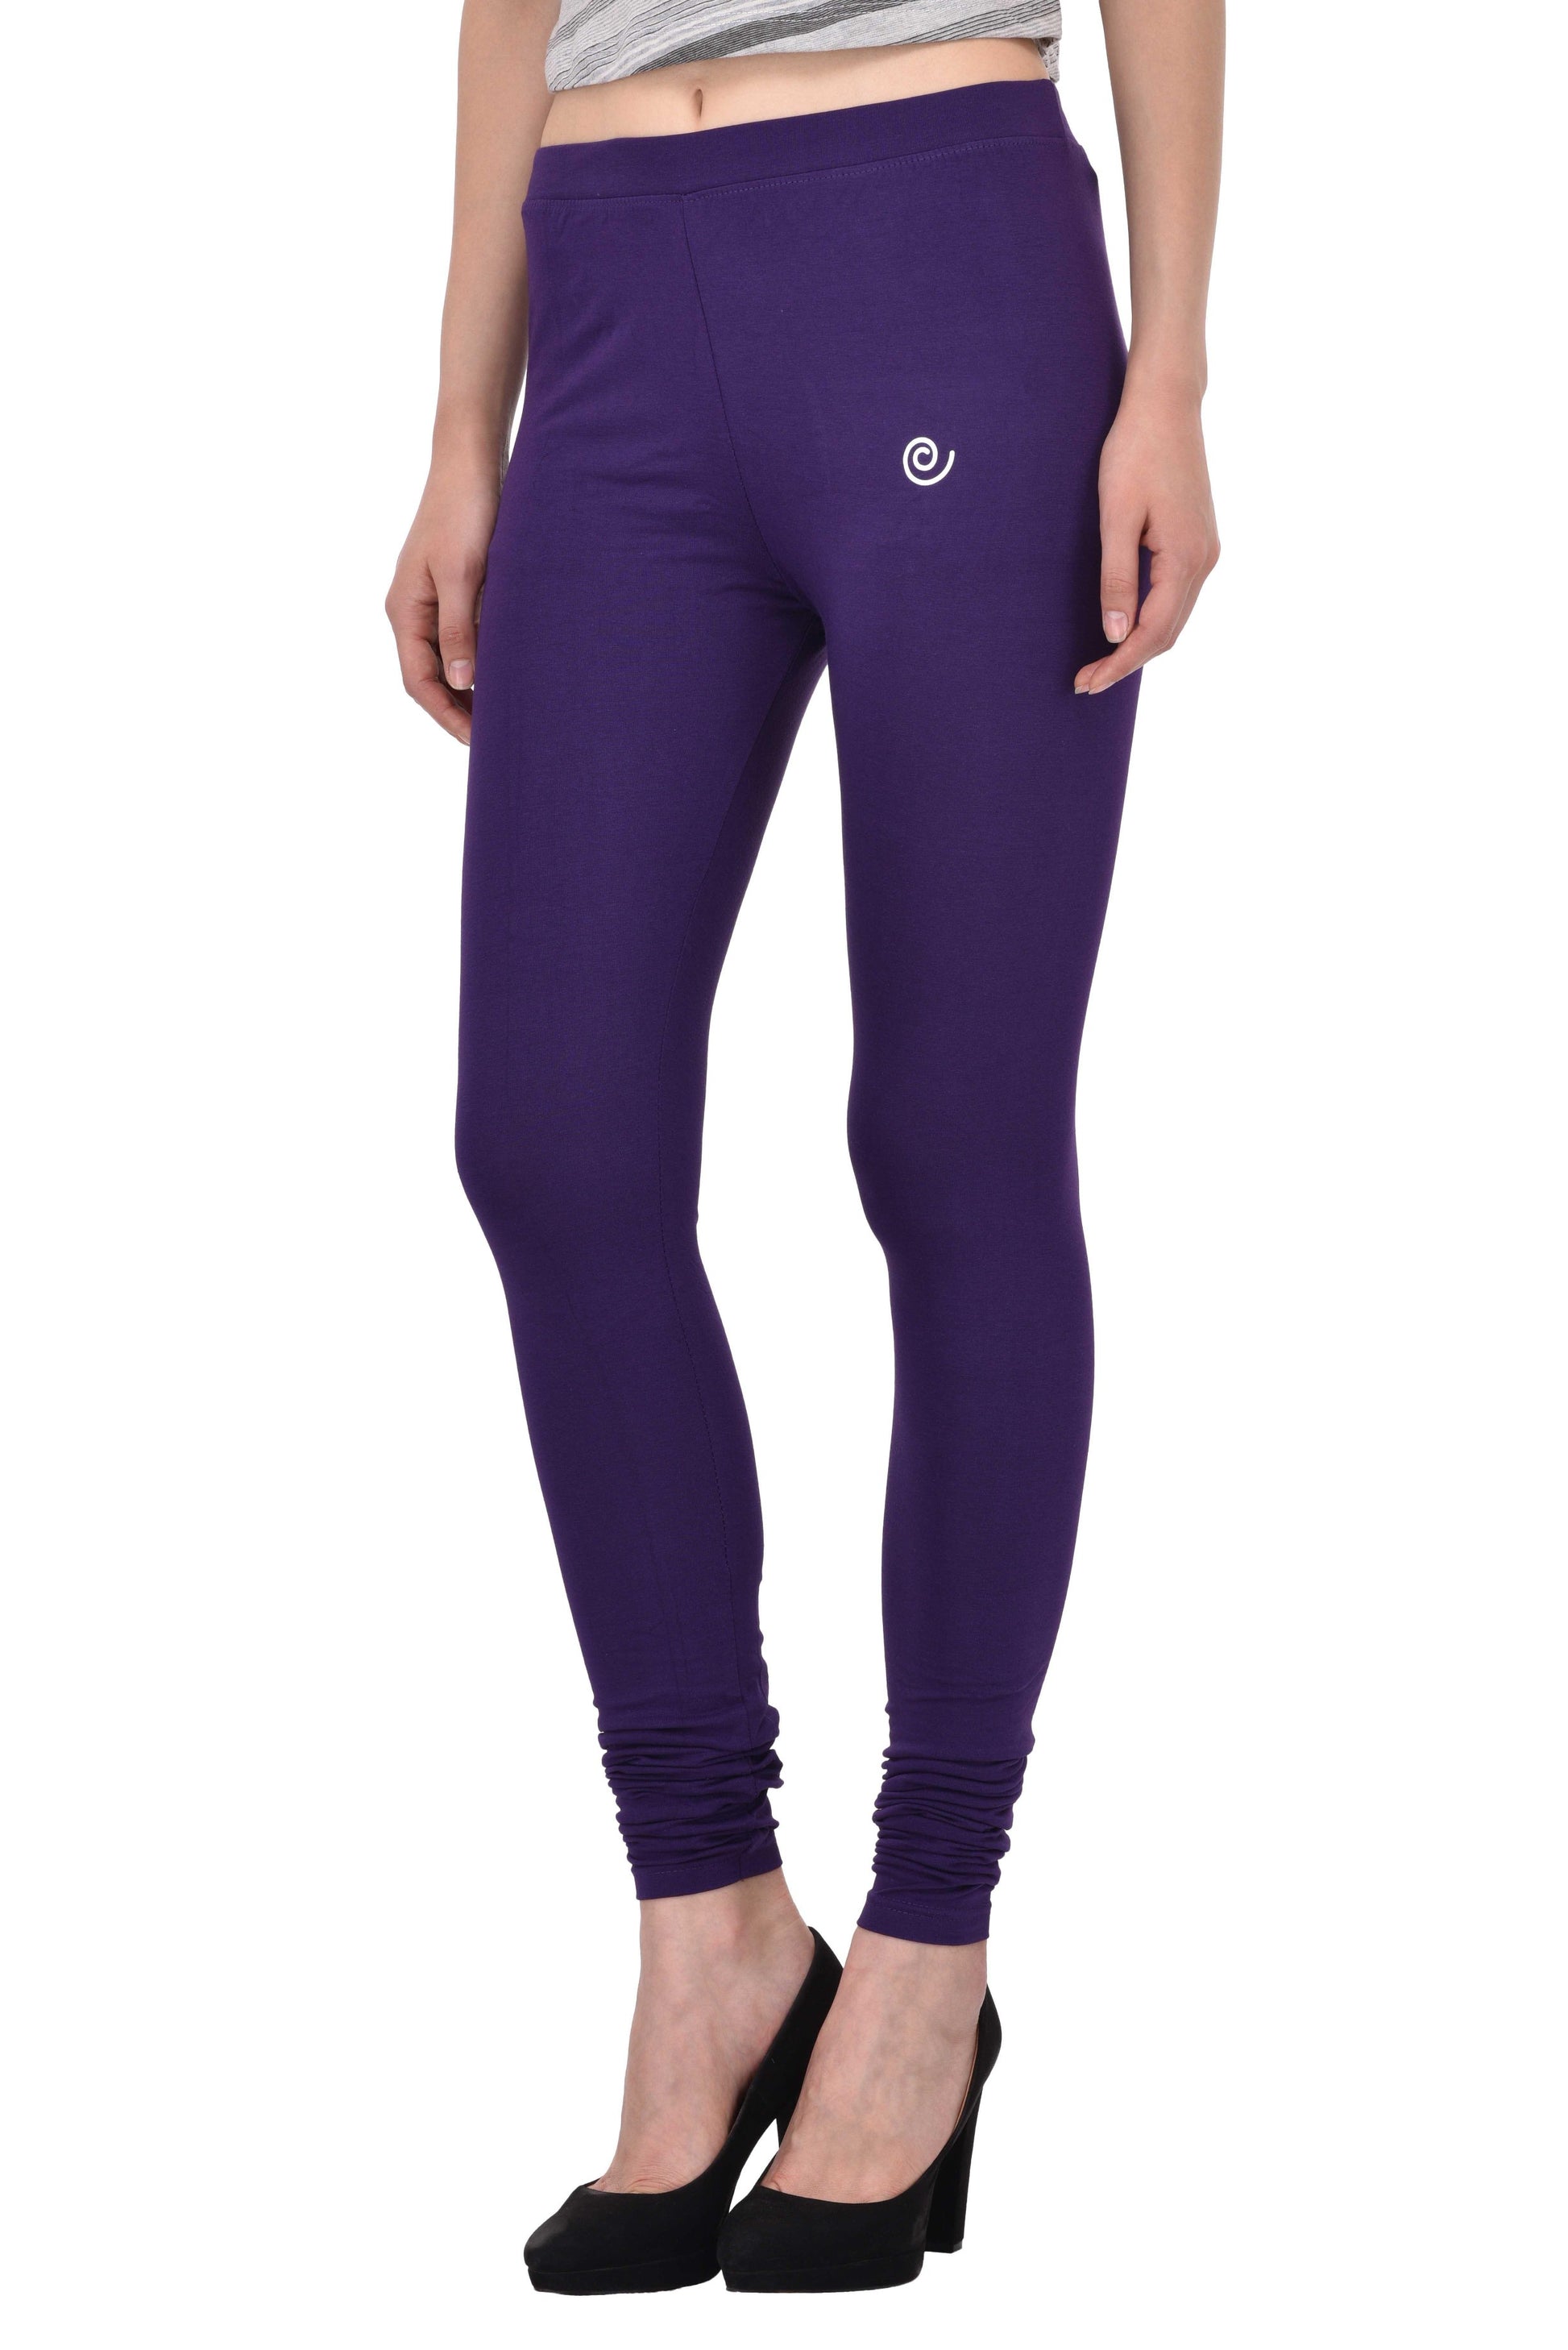 Diti Purple Cotton Leggings for Women Diti